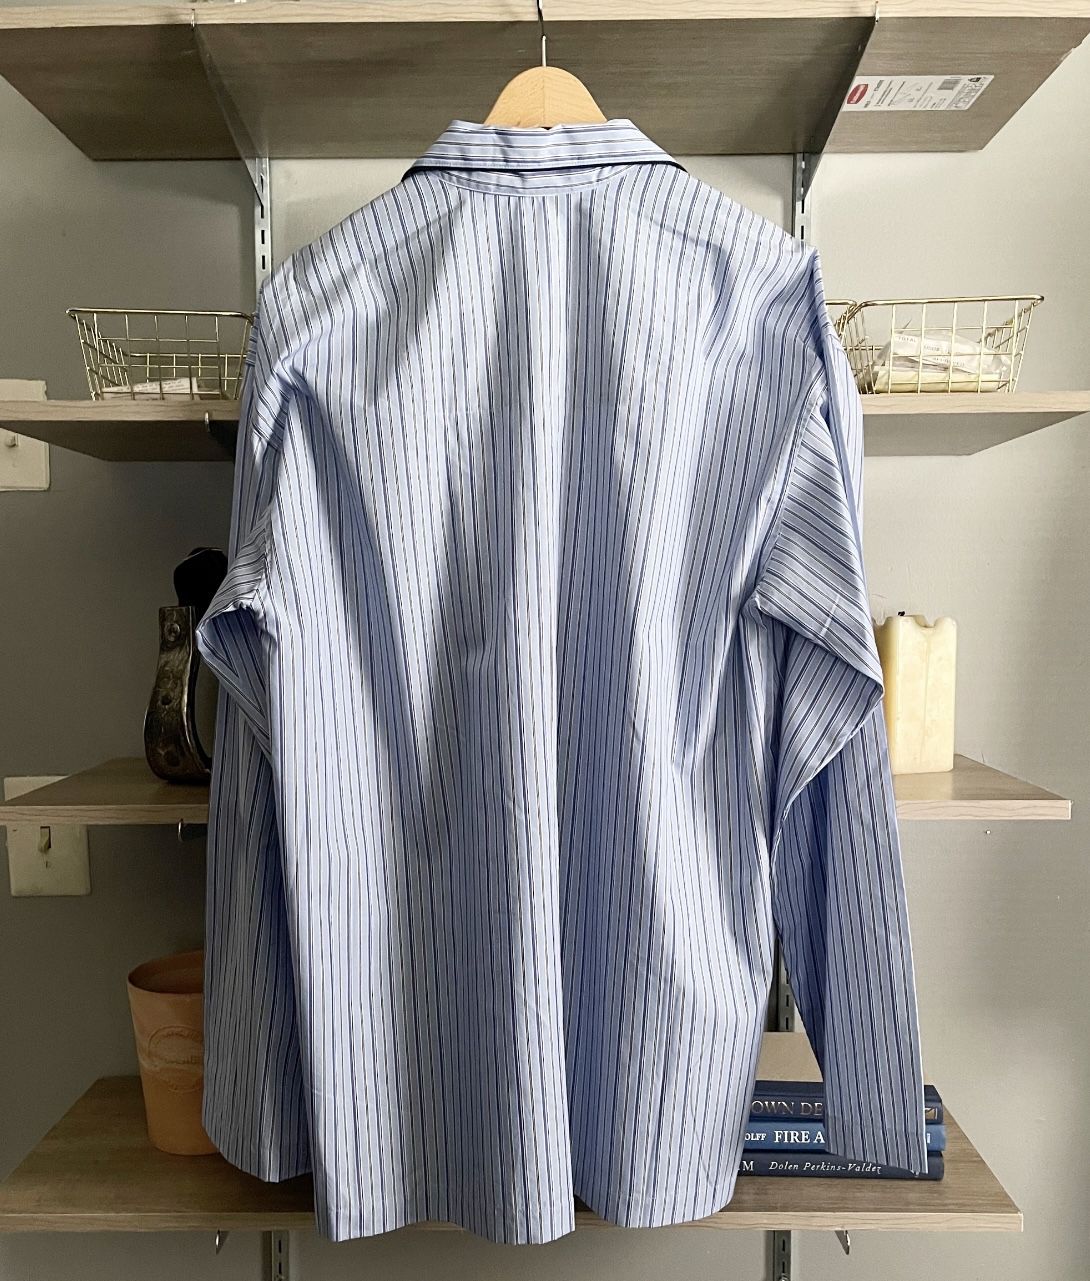 New! Mens Polo Ralph Lauren Pajama Shirt button down. Size L